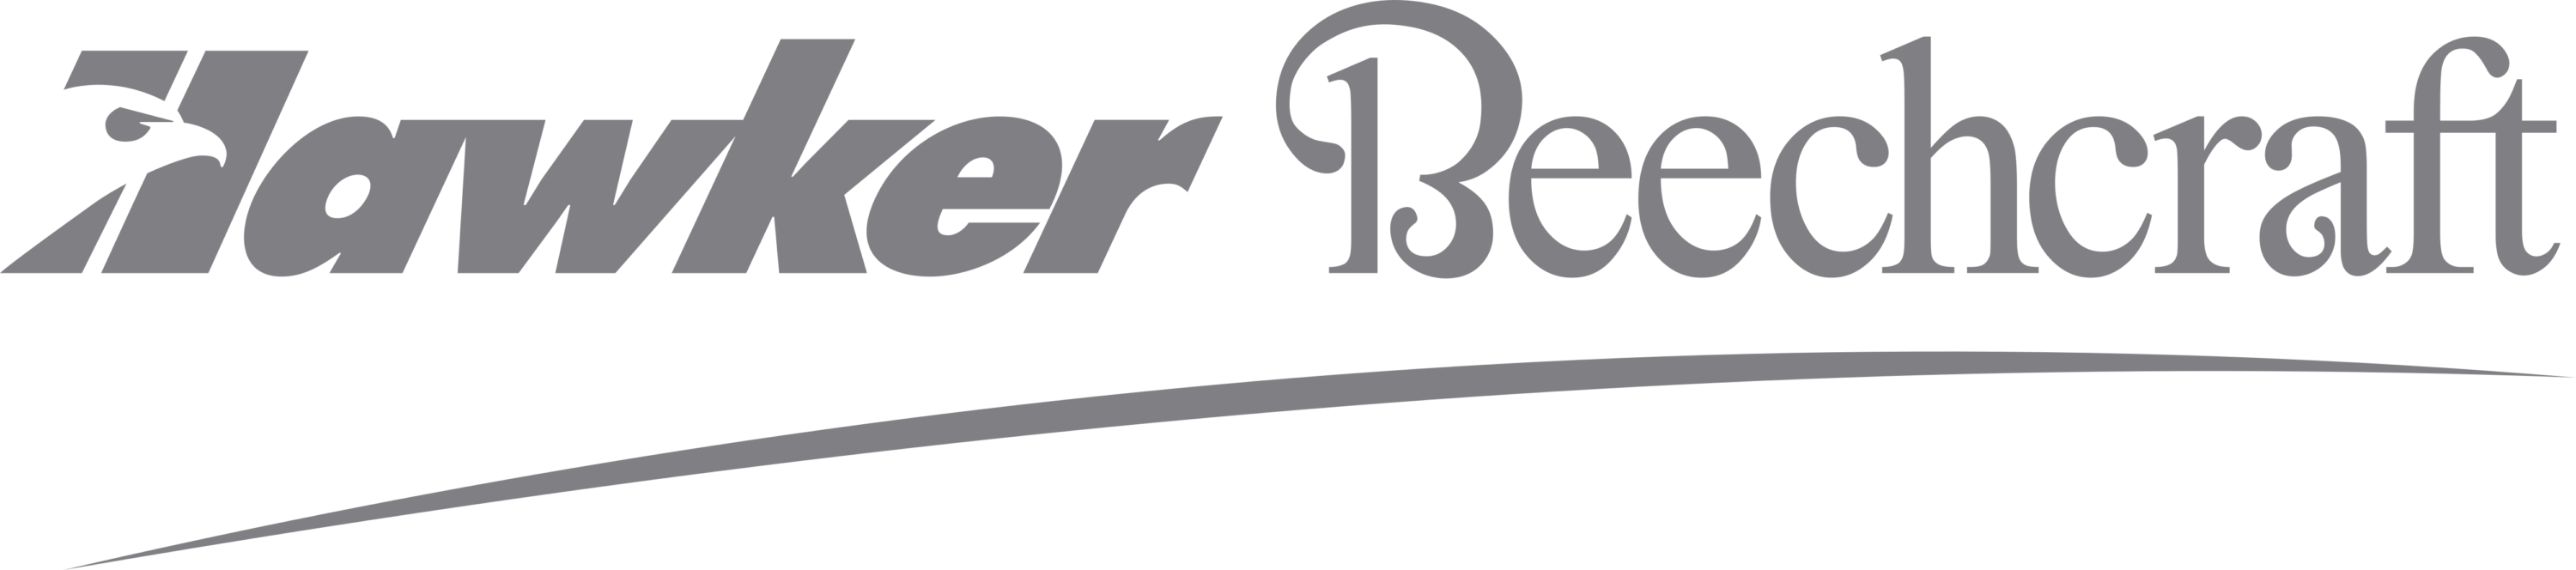 Hawker Beechcraft Logo